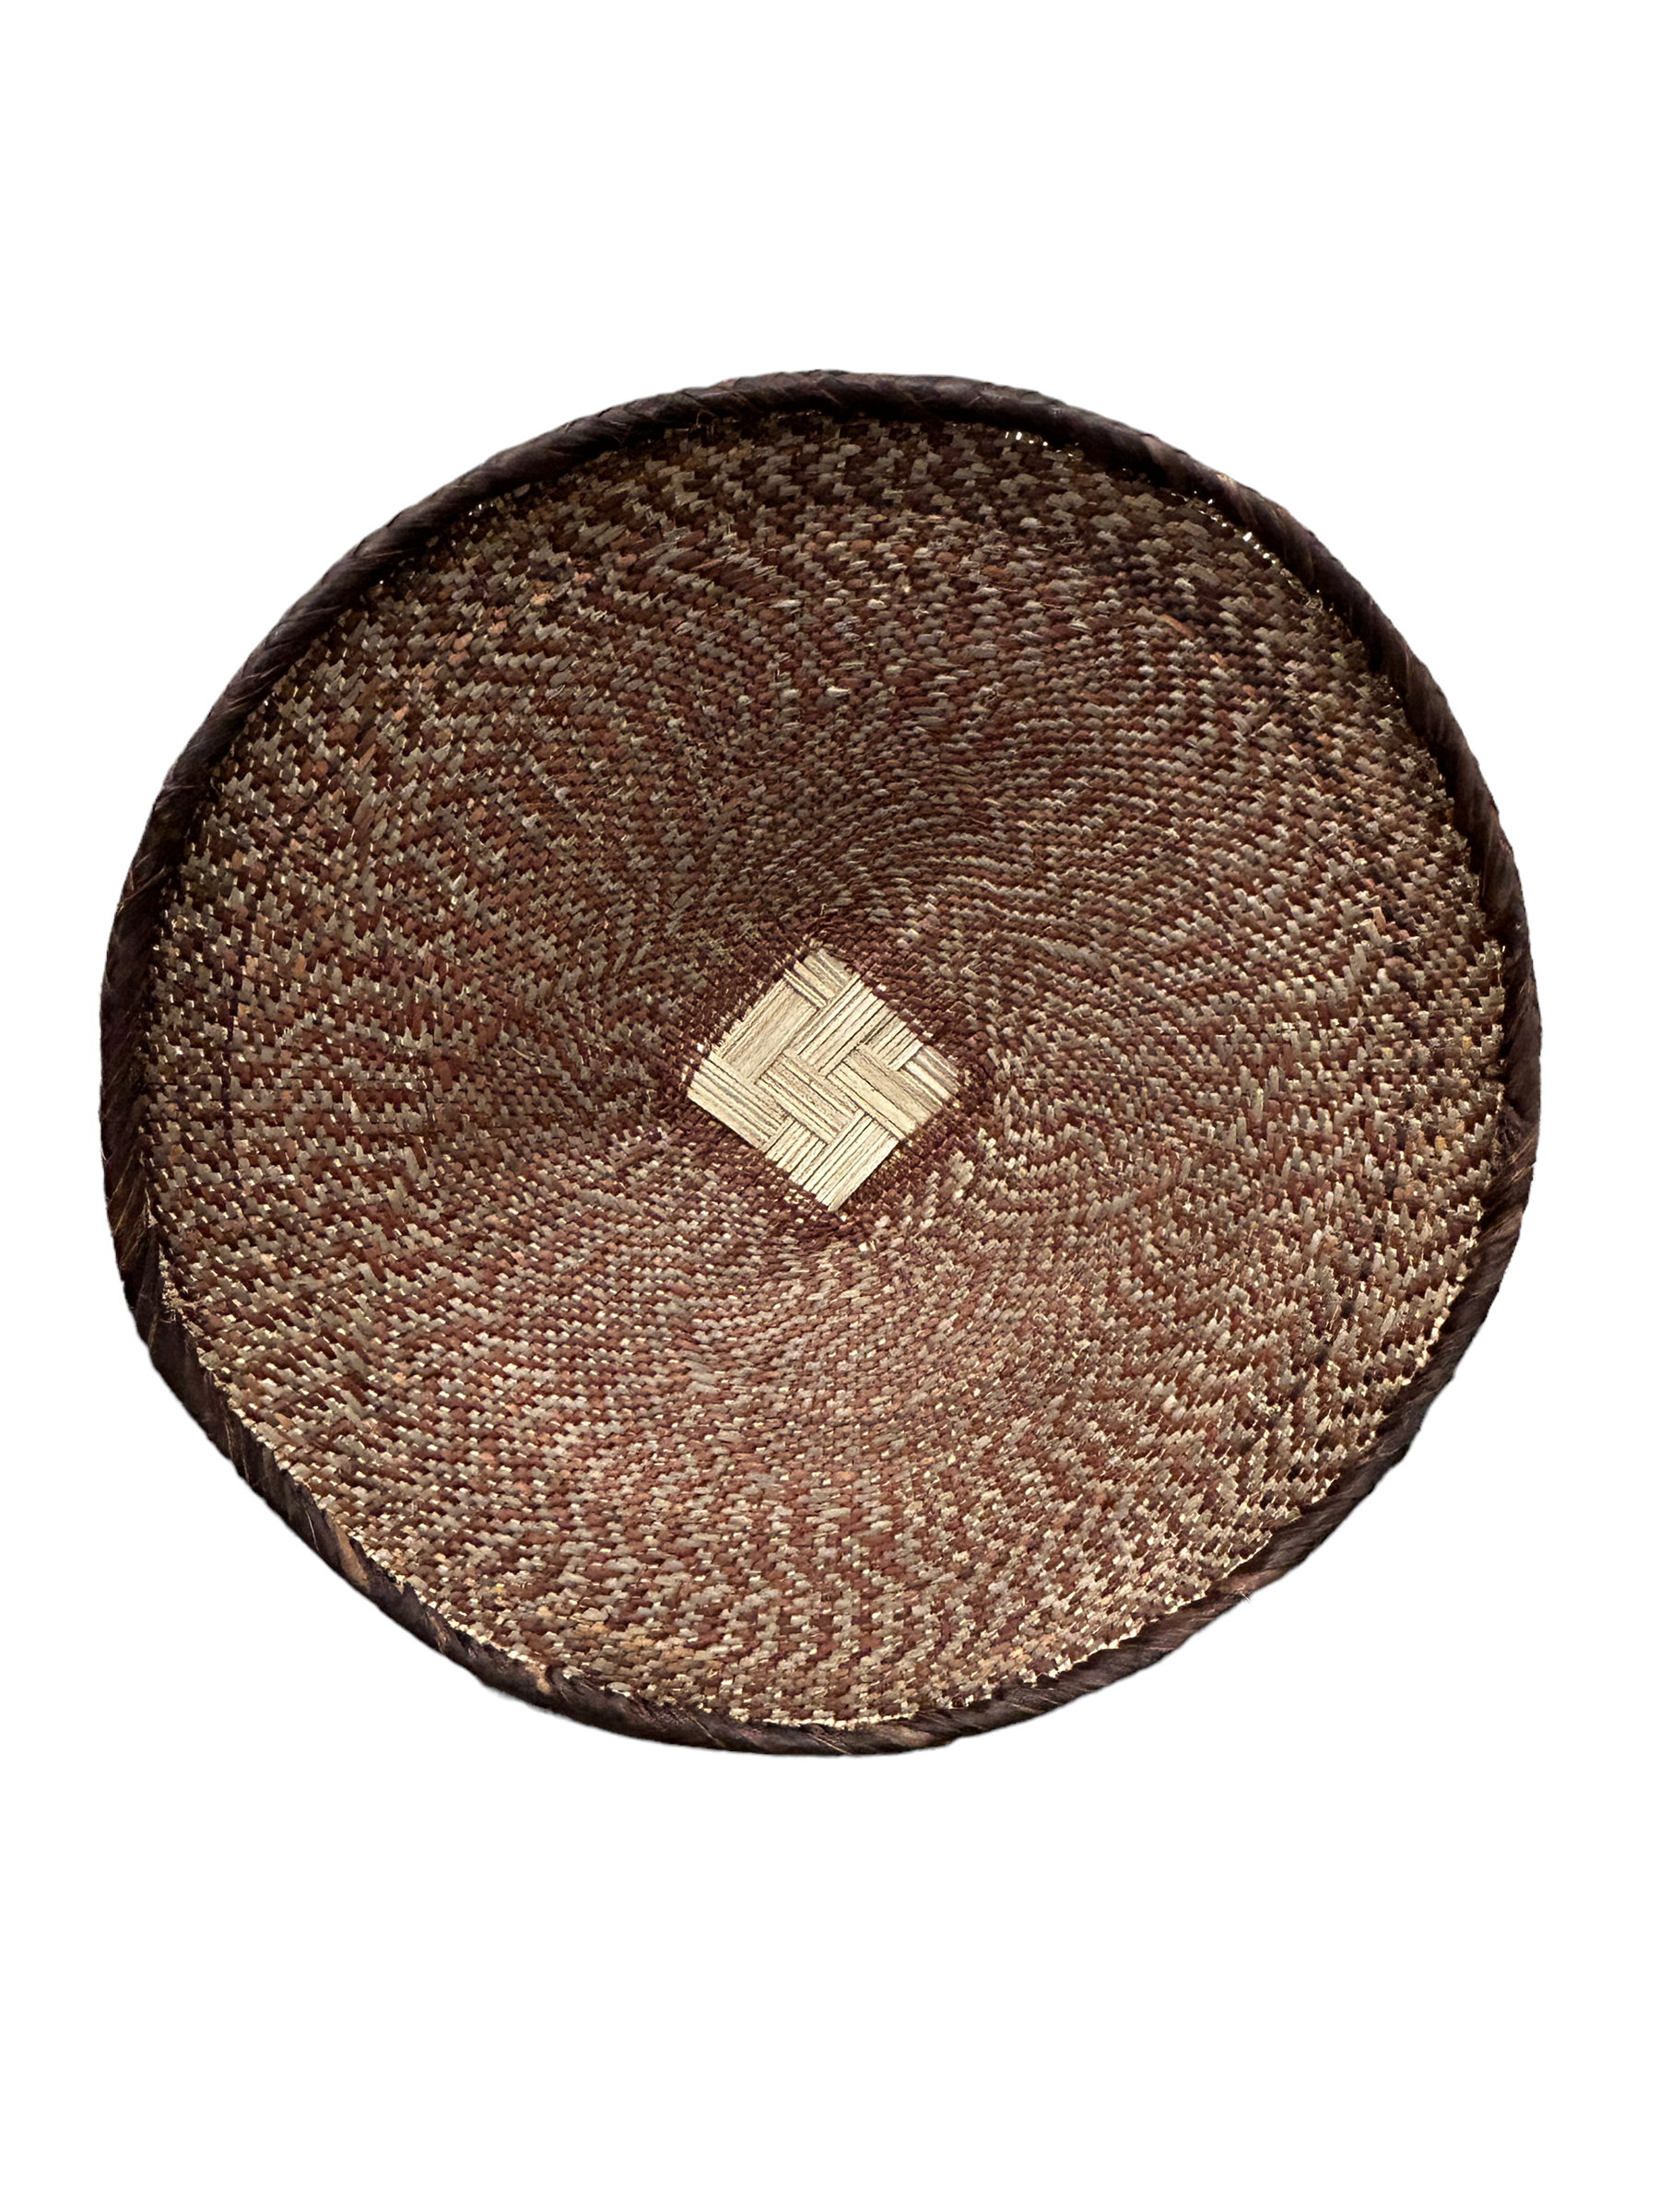 botanicalboysuk Tonga Basket Natural (45-02)